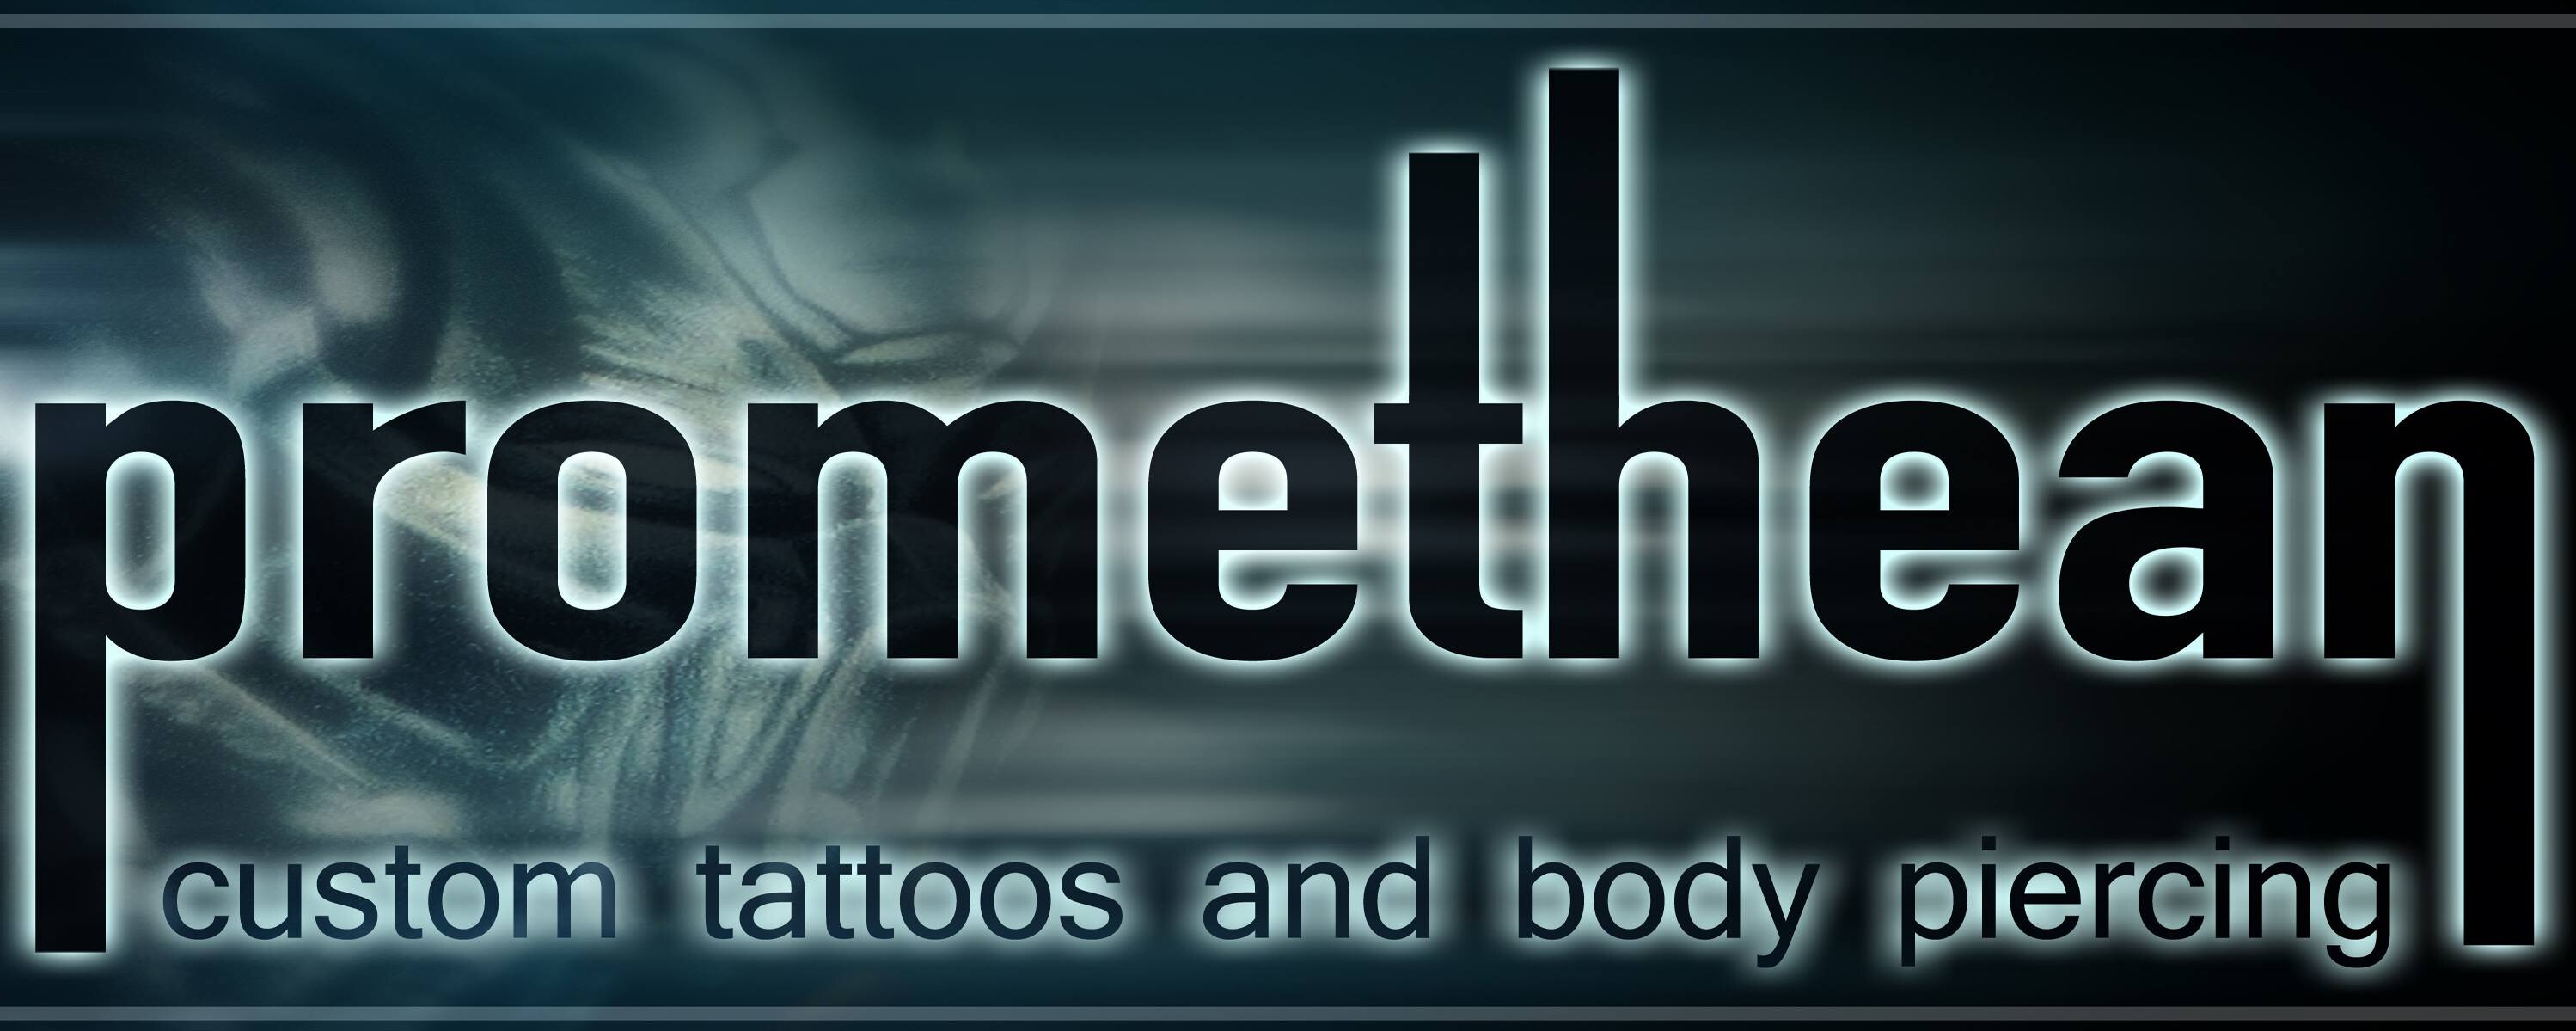 Promethean Tattoo & Body Piercing — Love Burlington